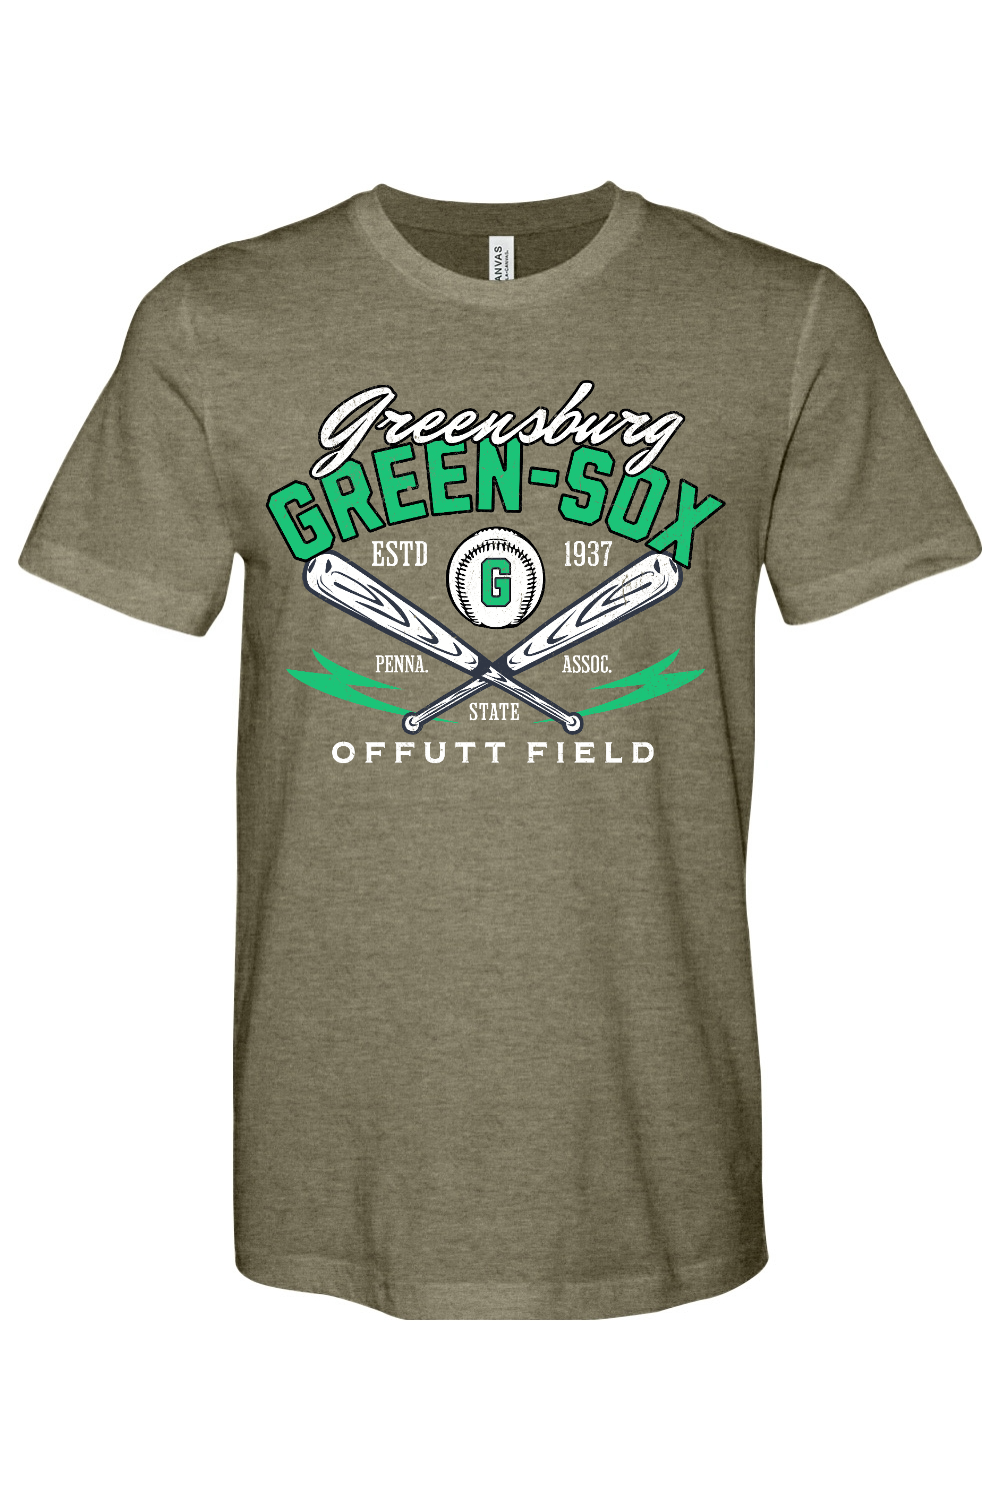 Greensburg Green Sox Baseball - 1937 - Yinzylvania